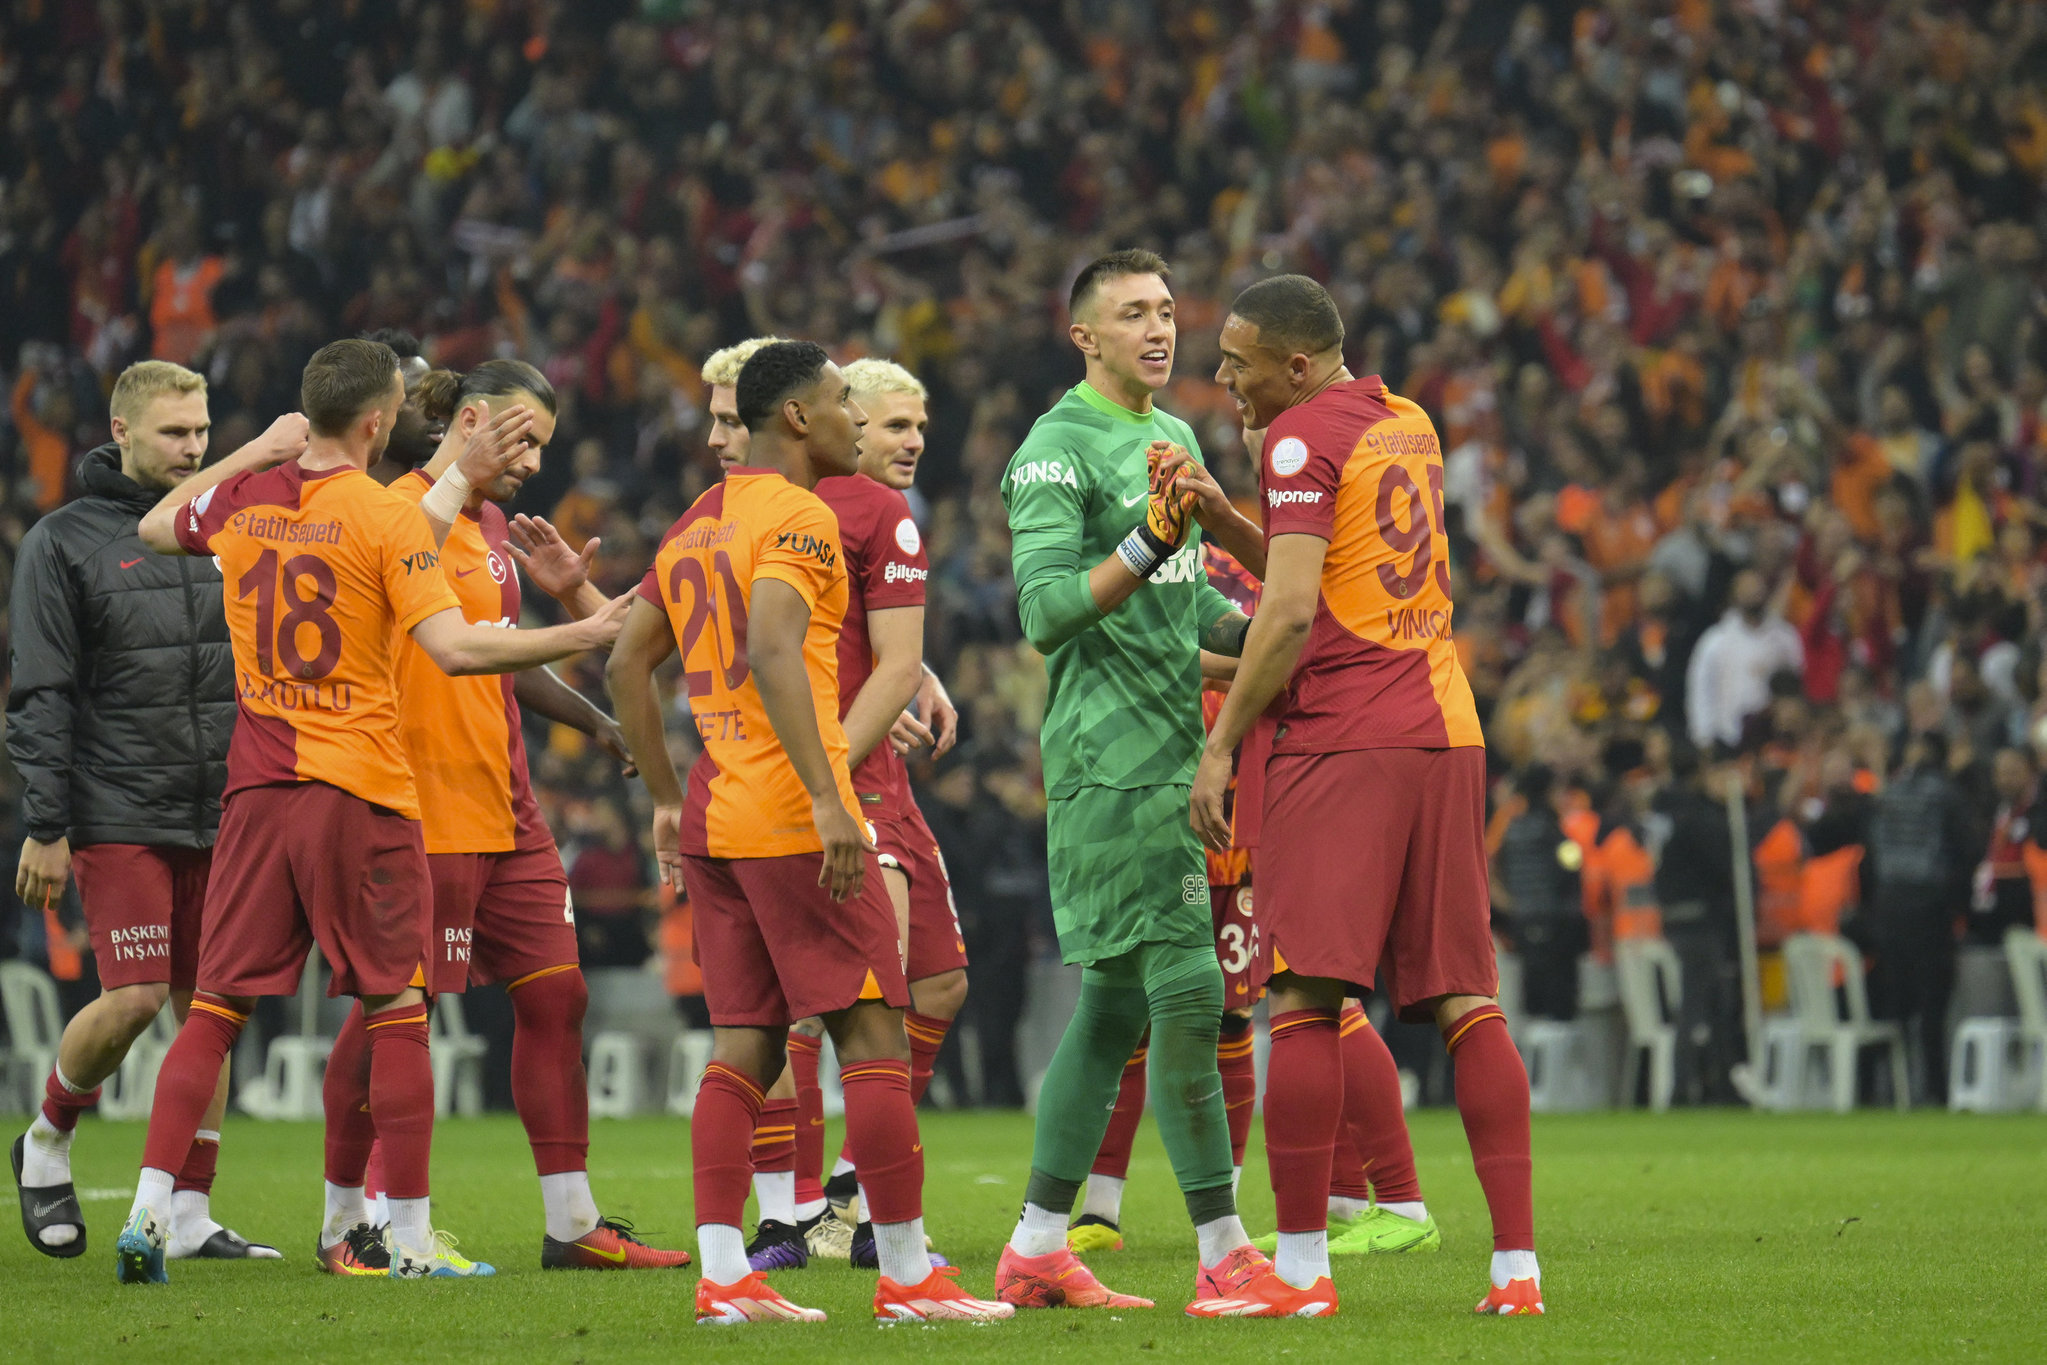 TRANSFER HABERİ | Galatasaray’a Arjantinli orta saha! Cimbom’dan dev transfer hamlesi